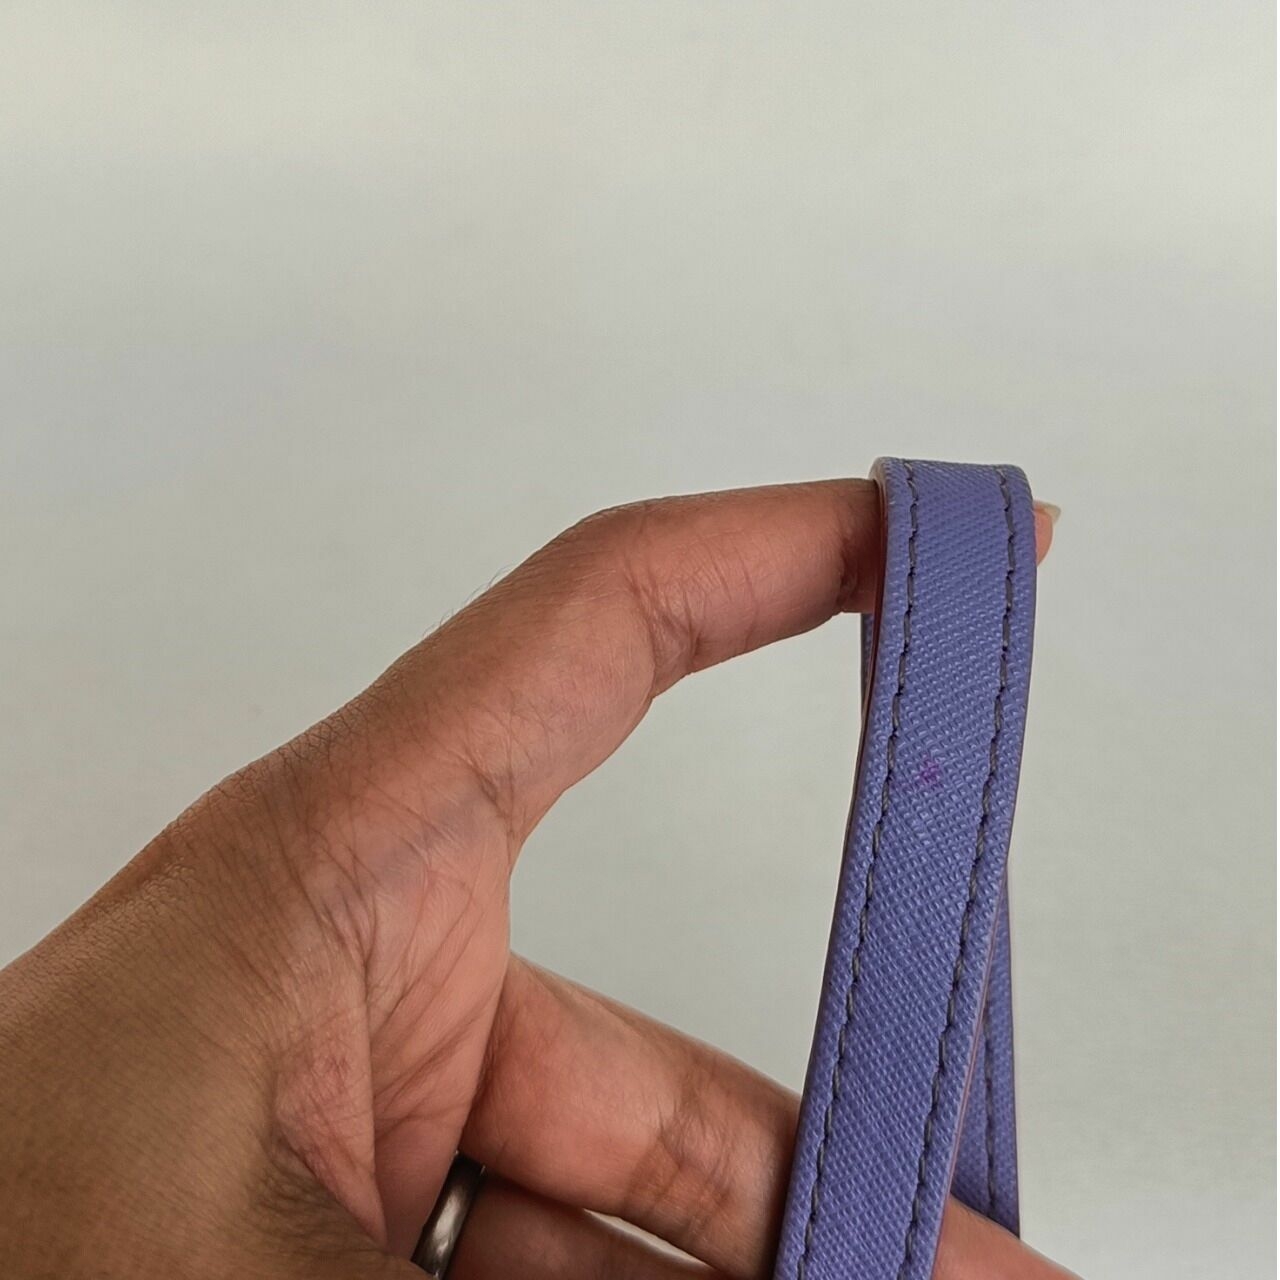 Rabeanco Purple Sling Bag